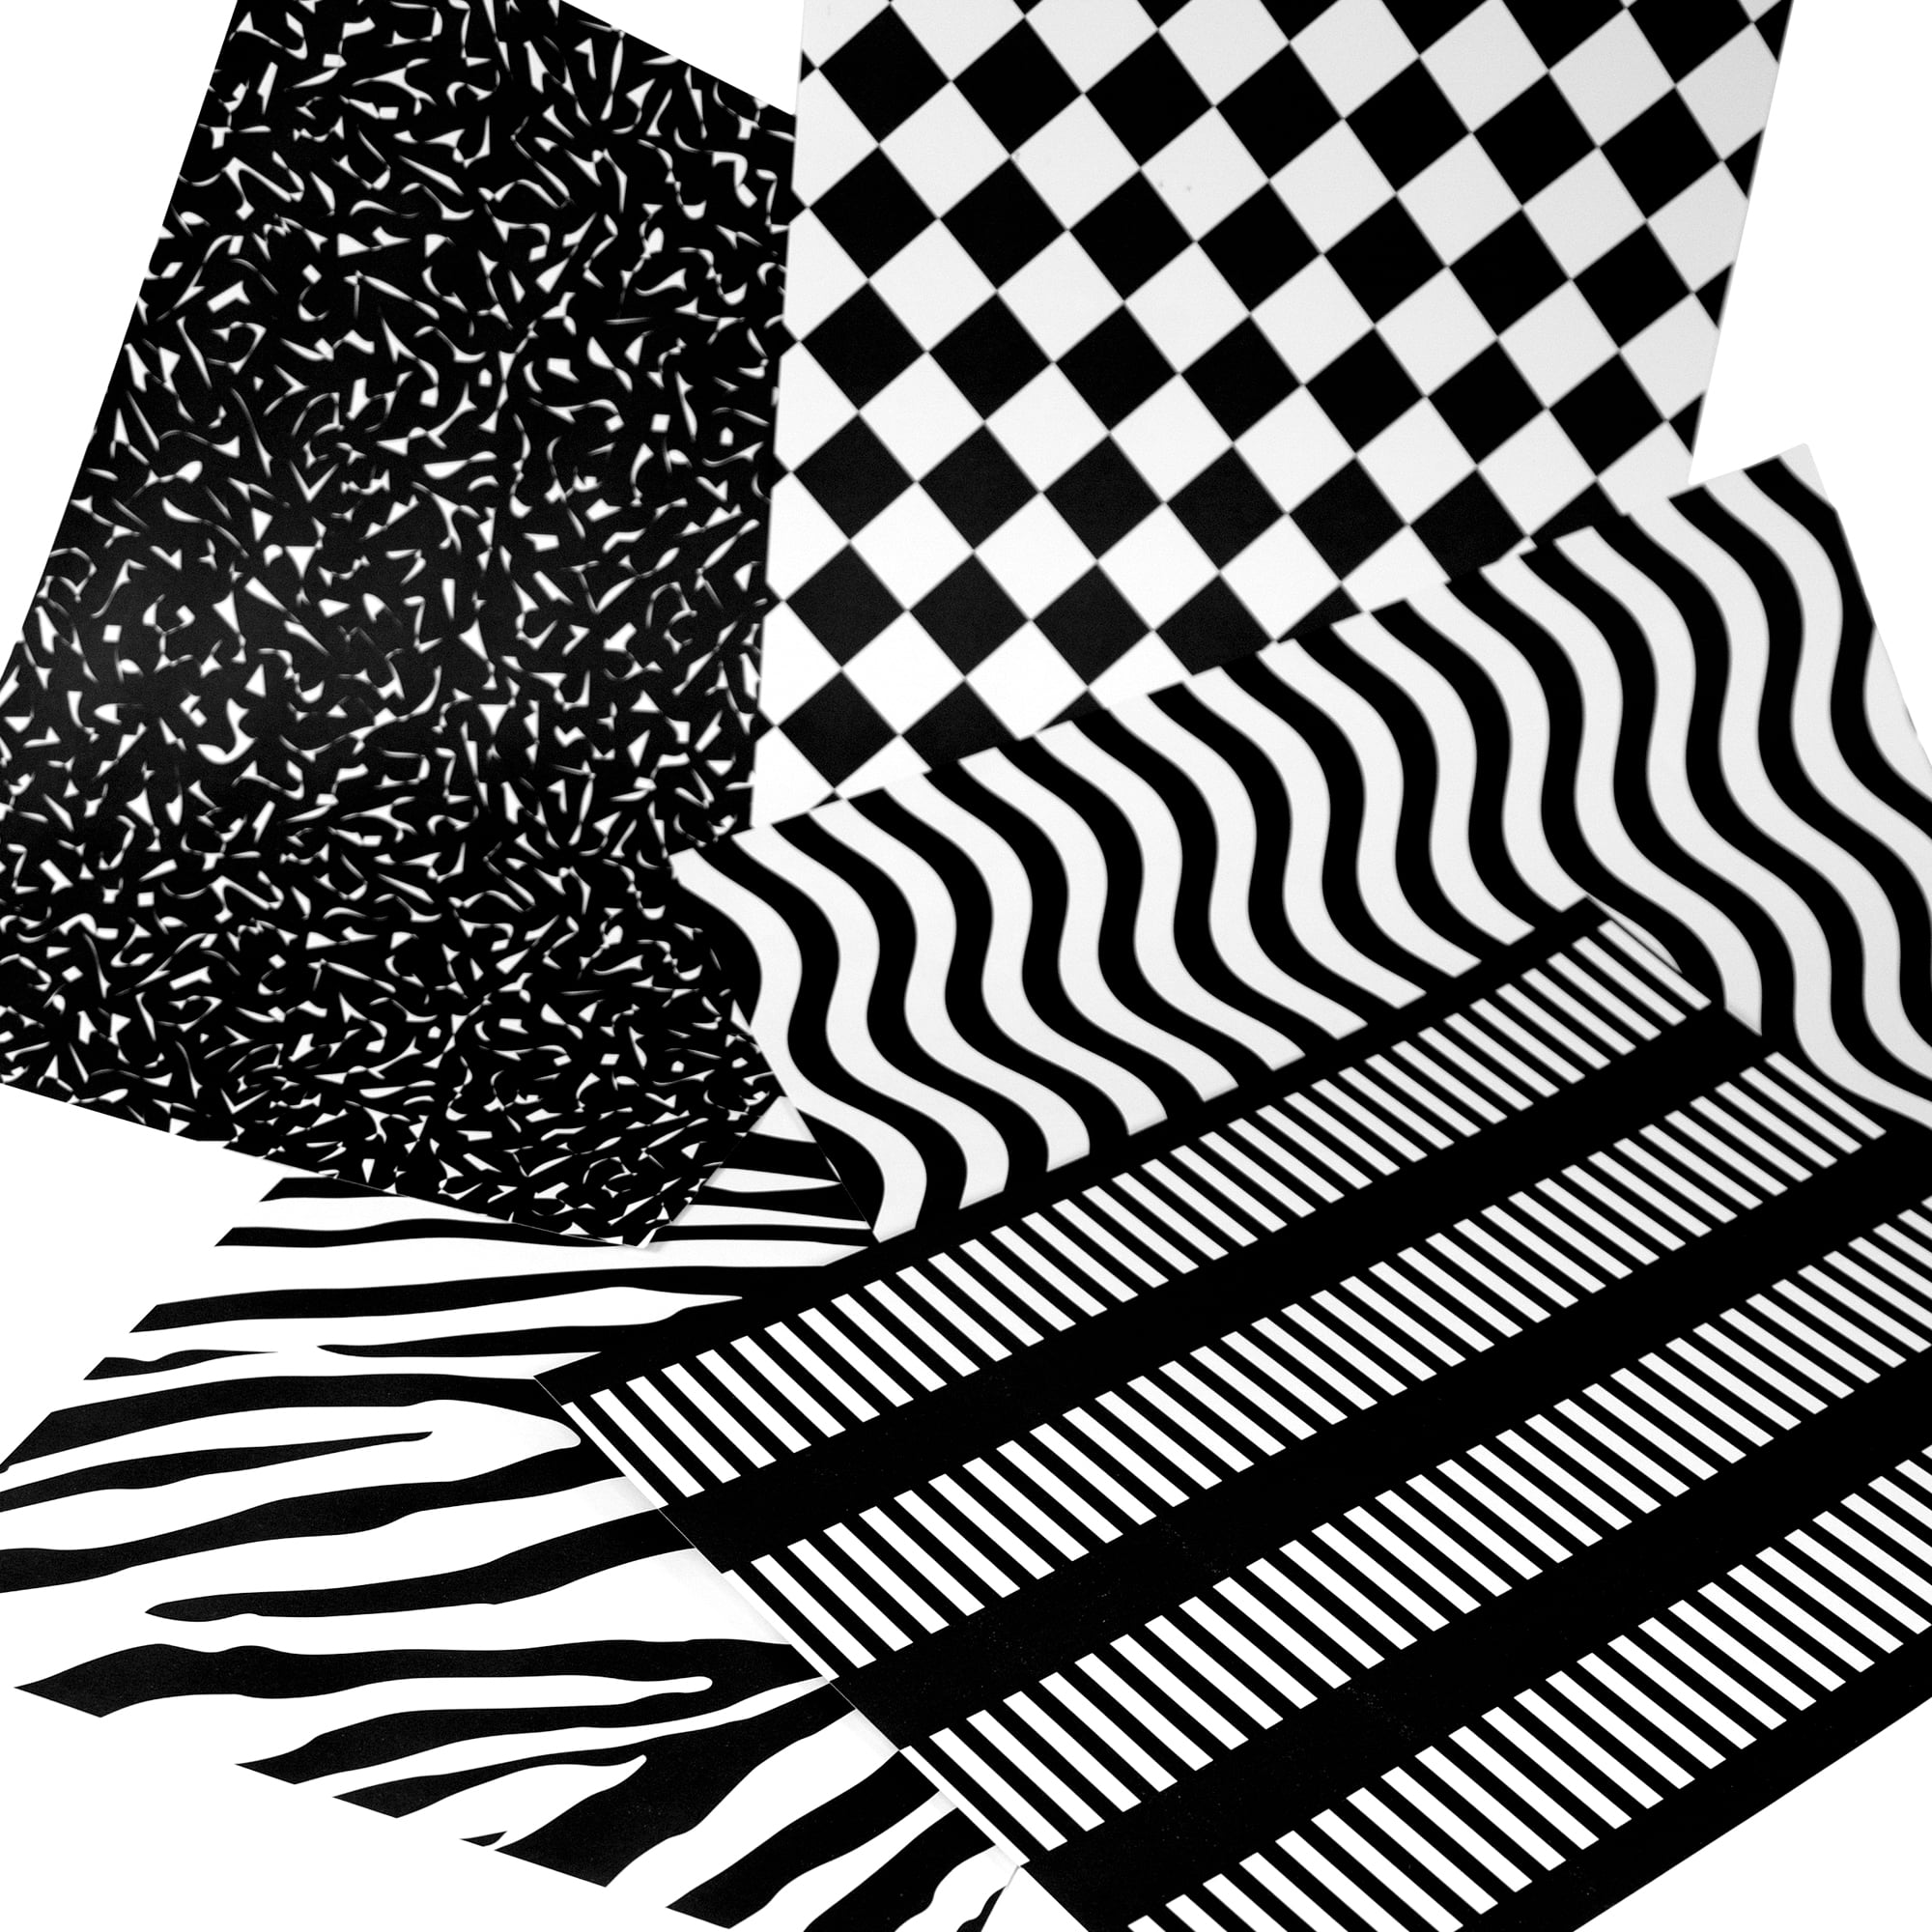 Craft Paper Black White Digital Paper Graphic by mascute.arte